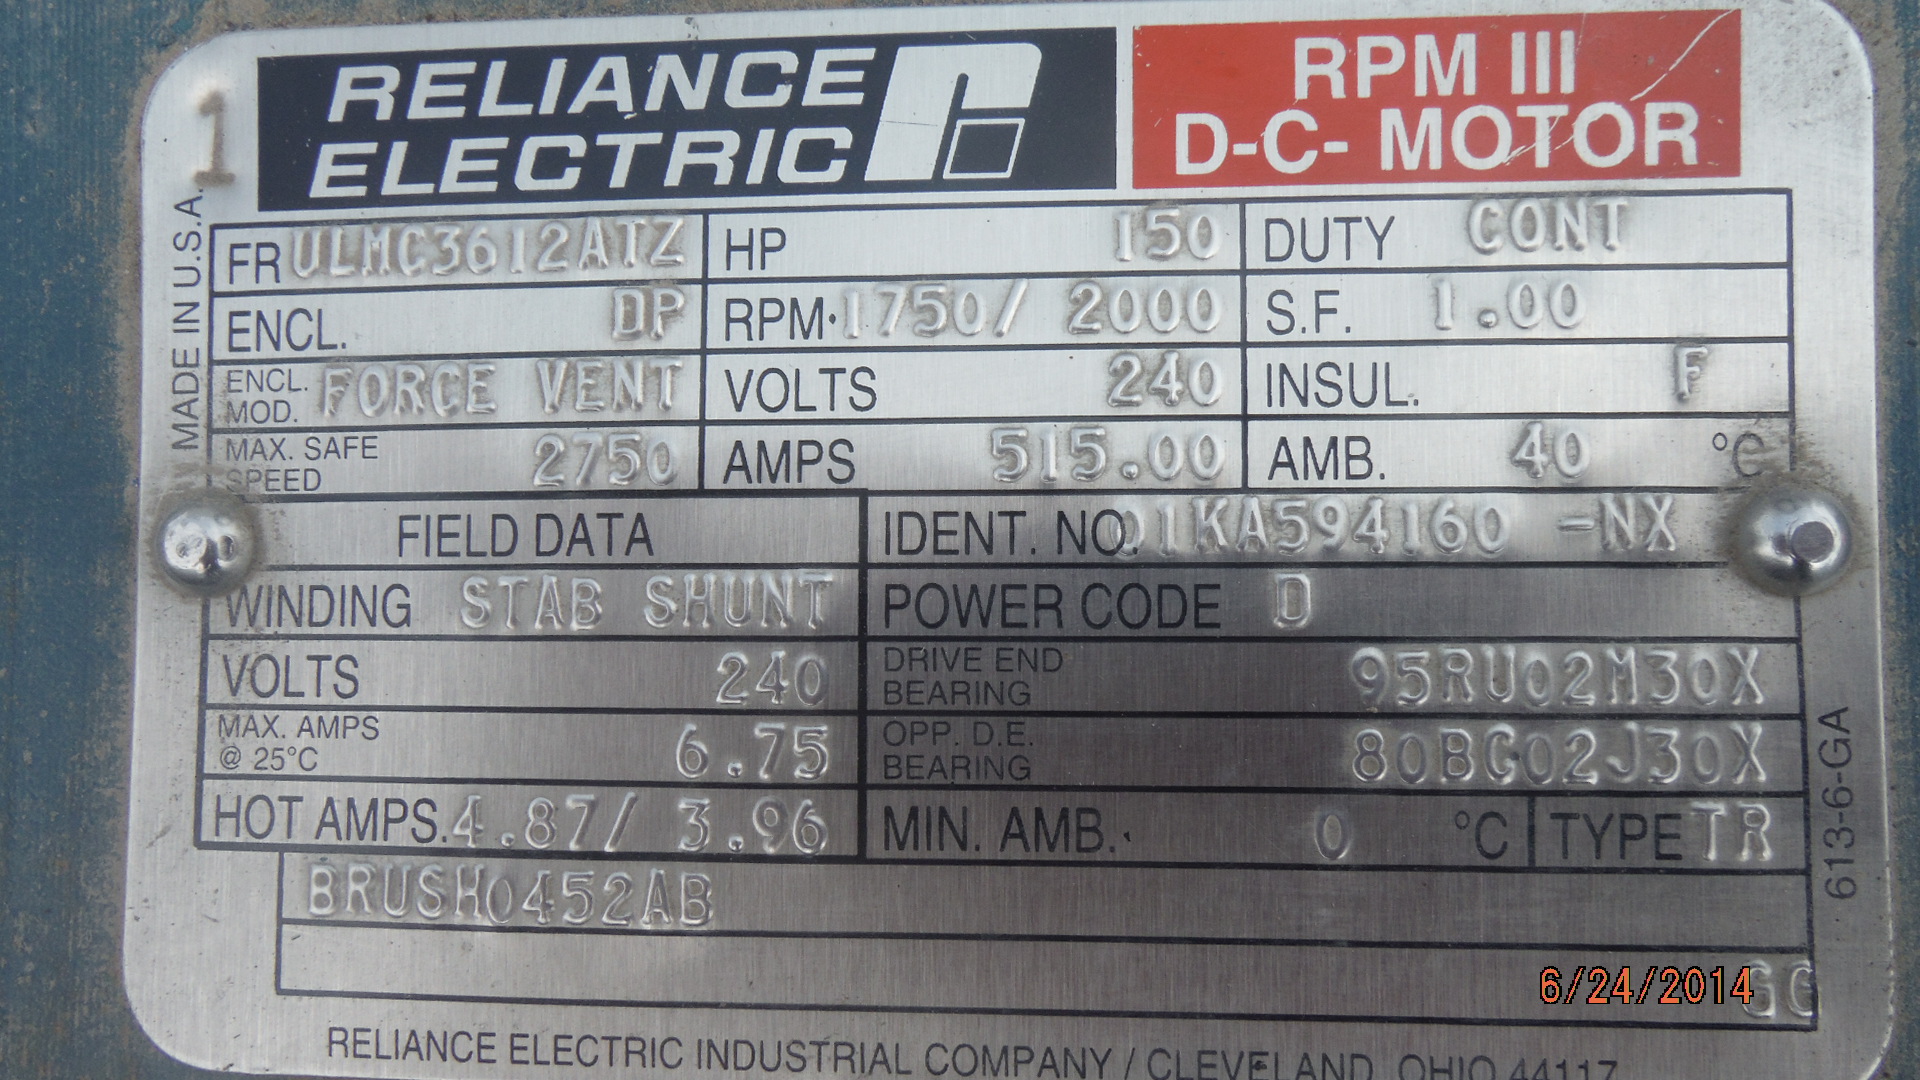 Reliance 150 HP 1750/2000 RPM ULMC3612ATZ DC Motors 71227